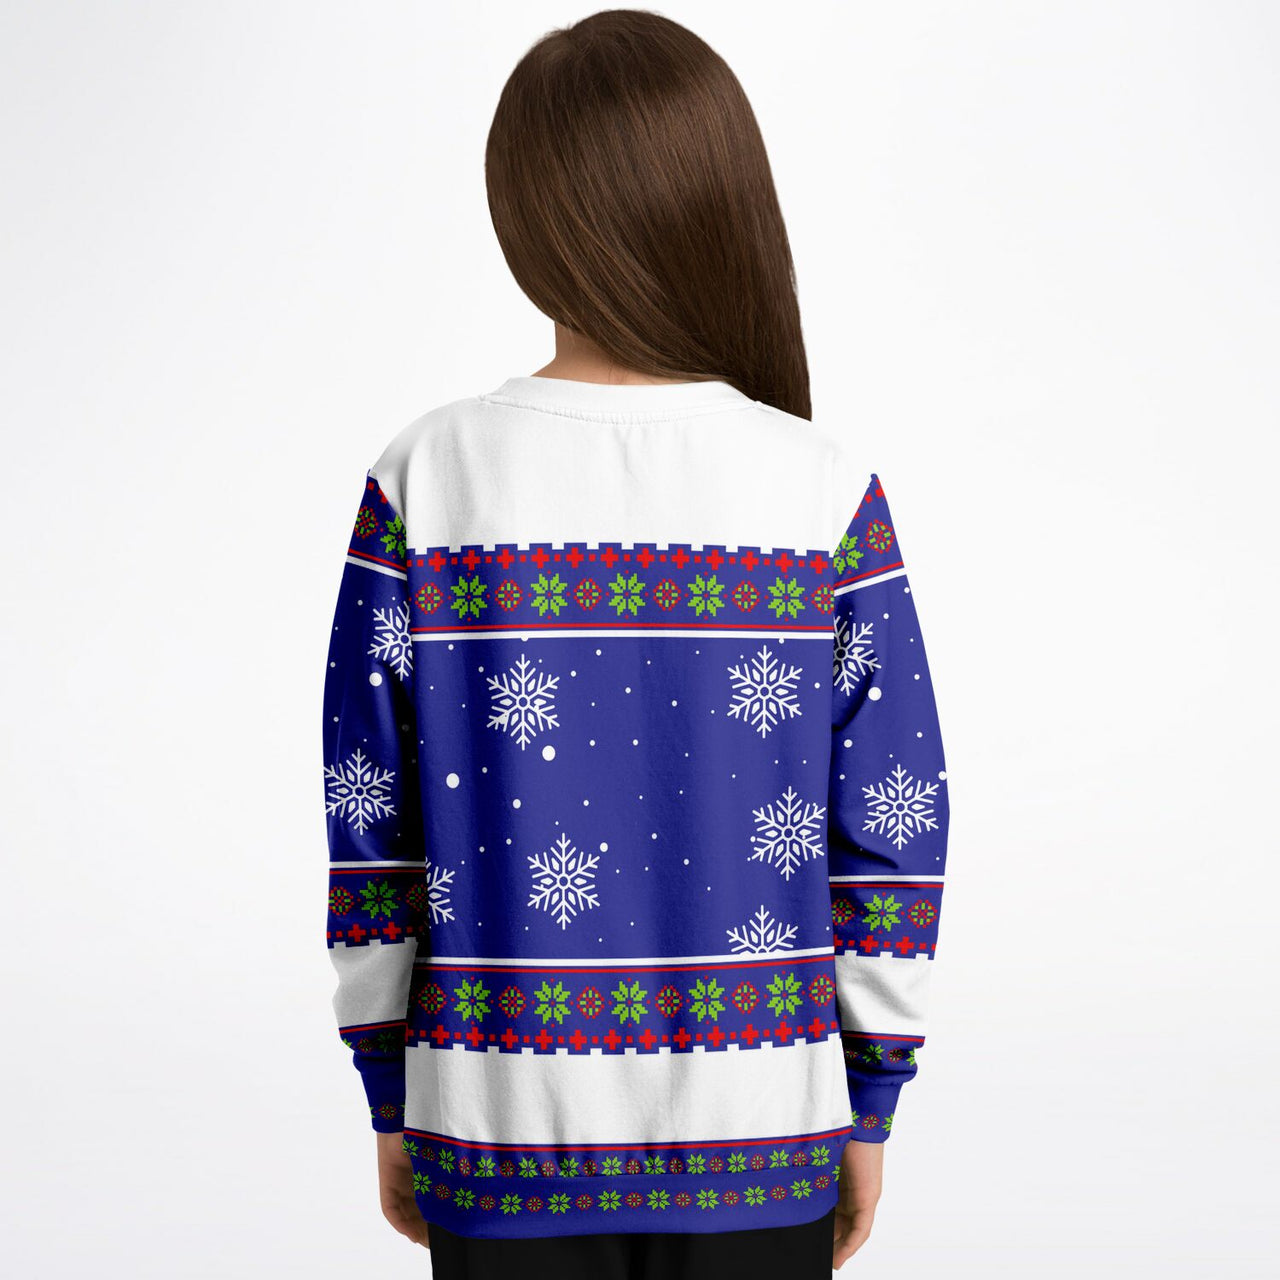 Bite me Ugly Christmas Fashion Youth Sweatshirt – AOP